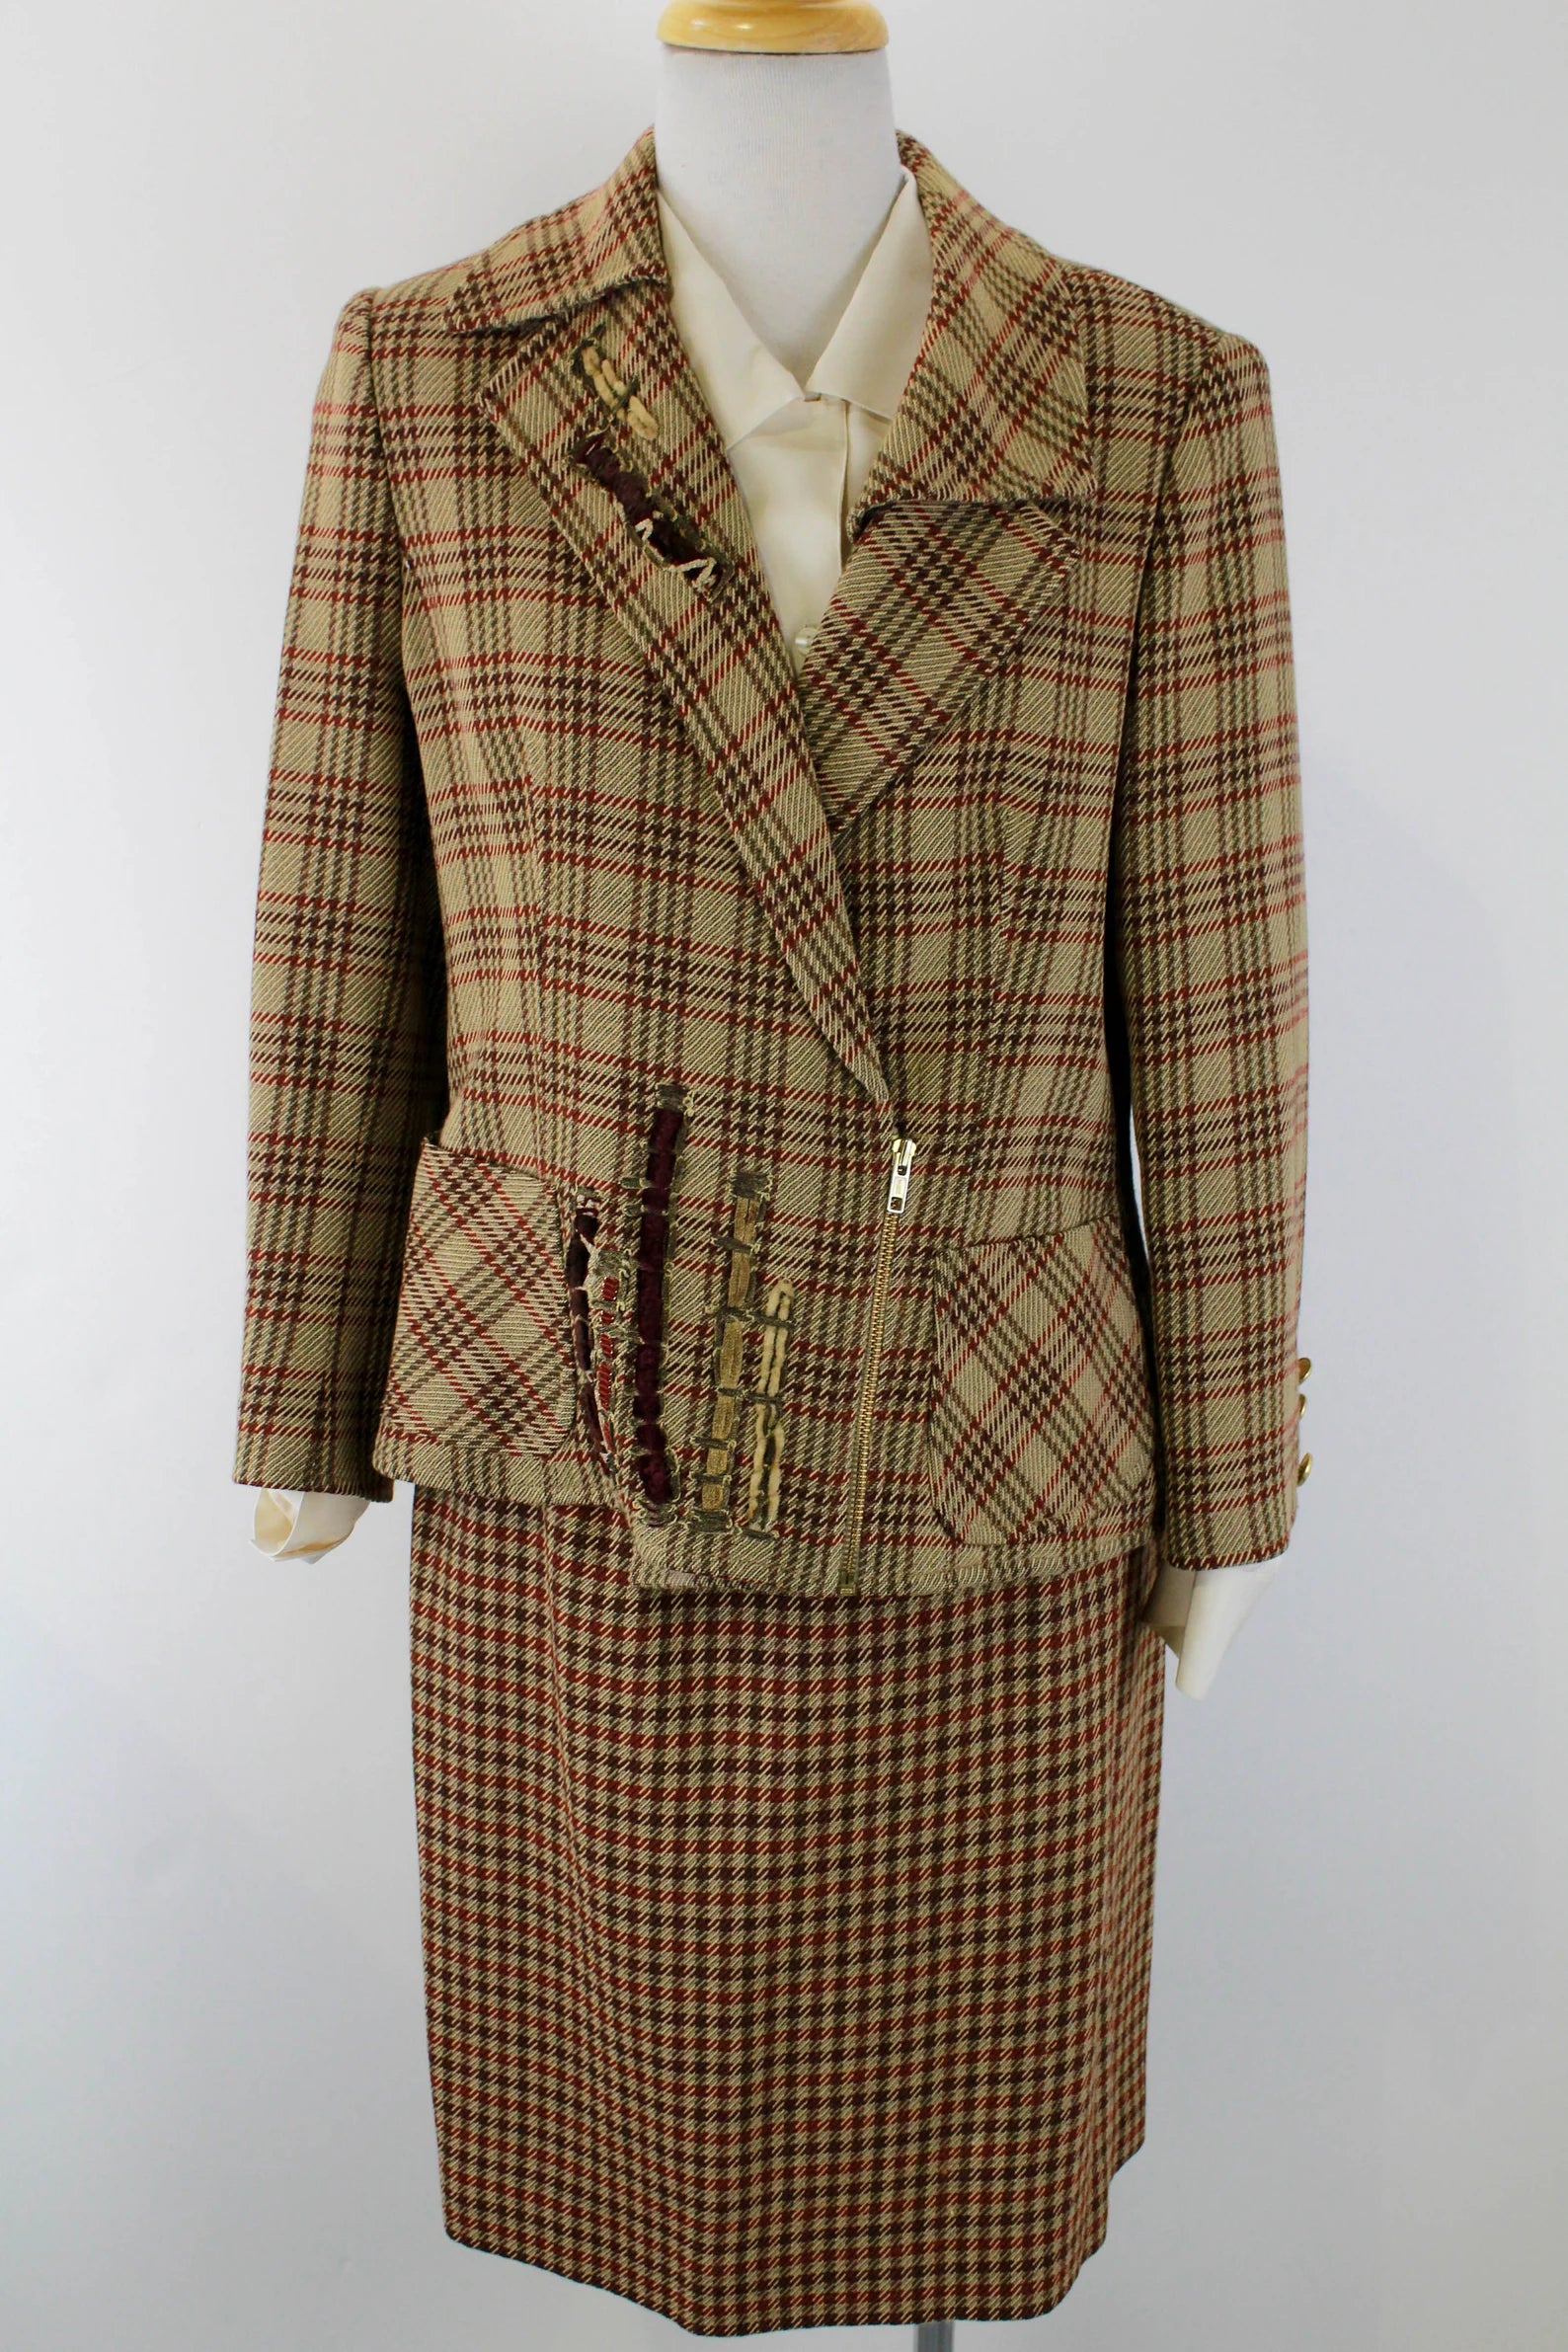 90s Christian Lacroix Suit, Vintage Christian Lacroix Designer Check Plaid Wool Skirt Suit, Made in France, Large